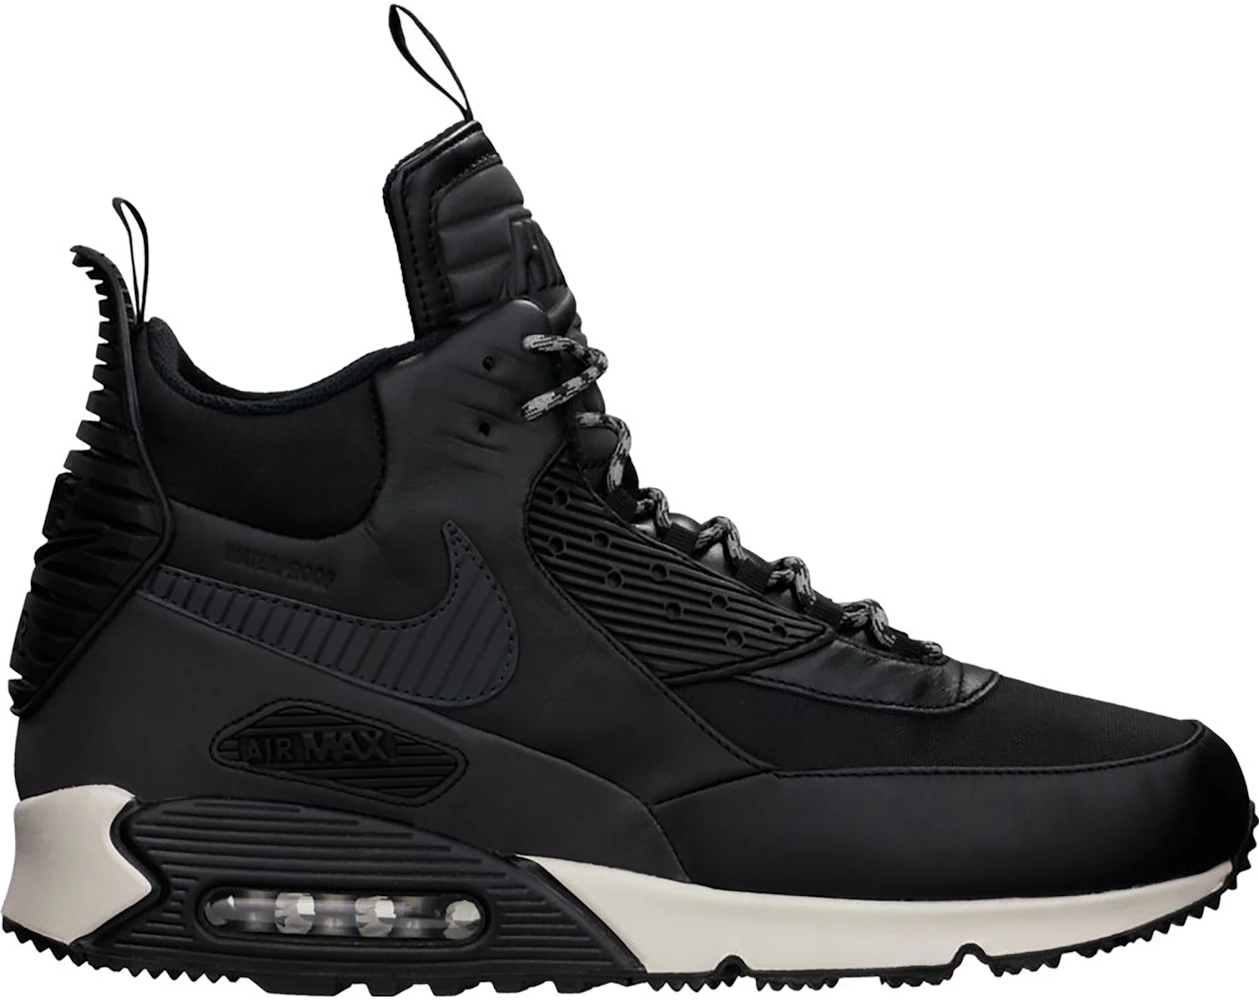 Jardines aluminio Ewell Nike Air Max 90 Sneakerboot Black Magnet Grey Men's - 684714-001 - US